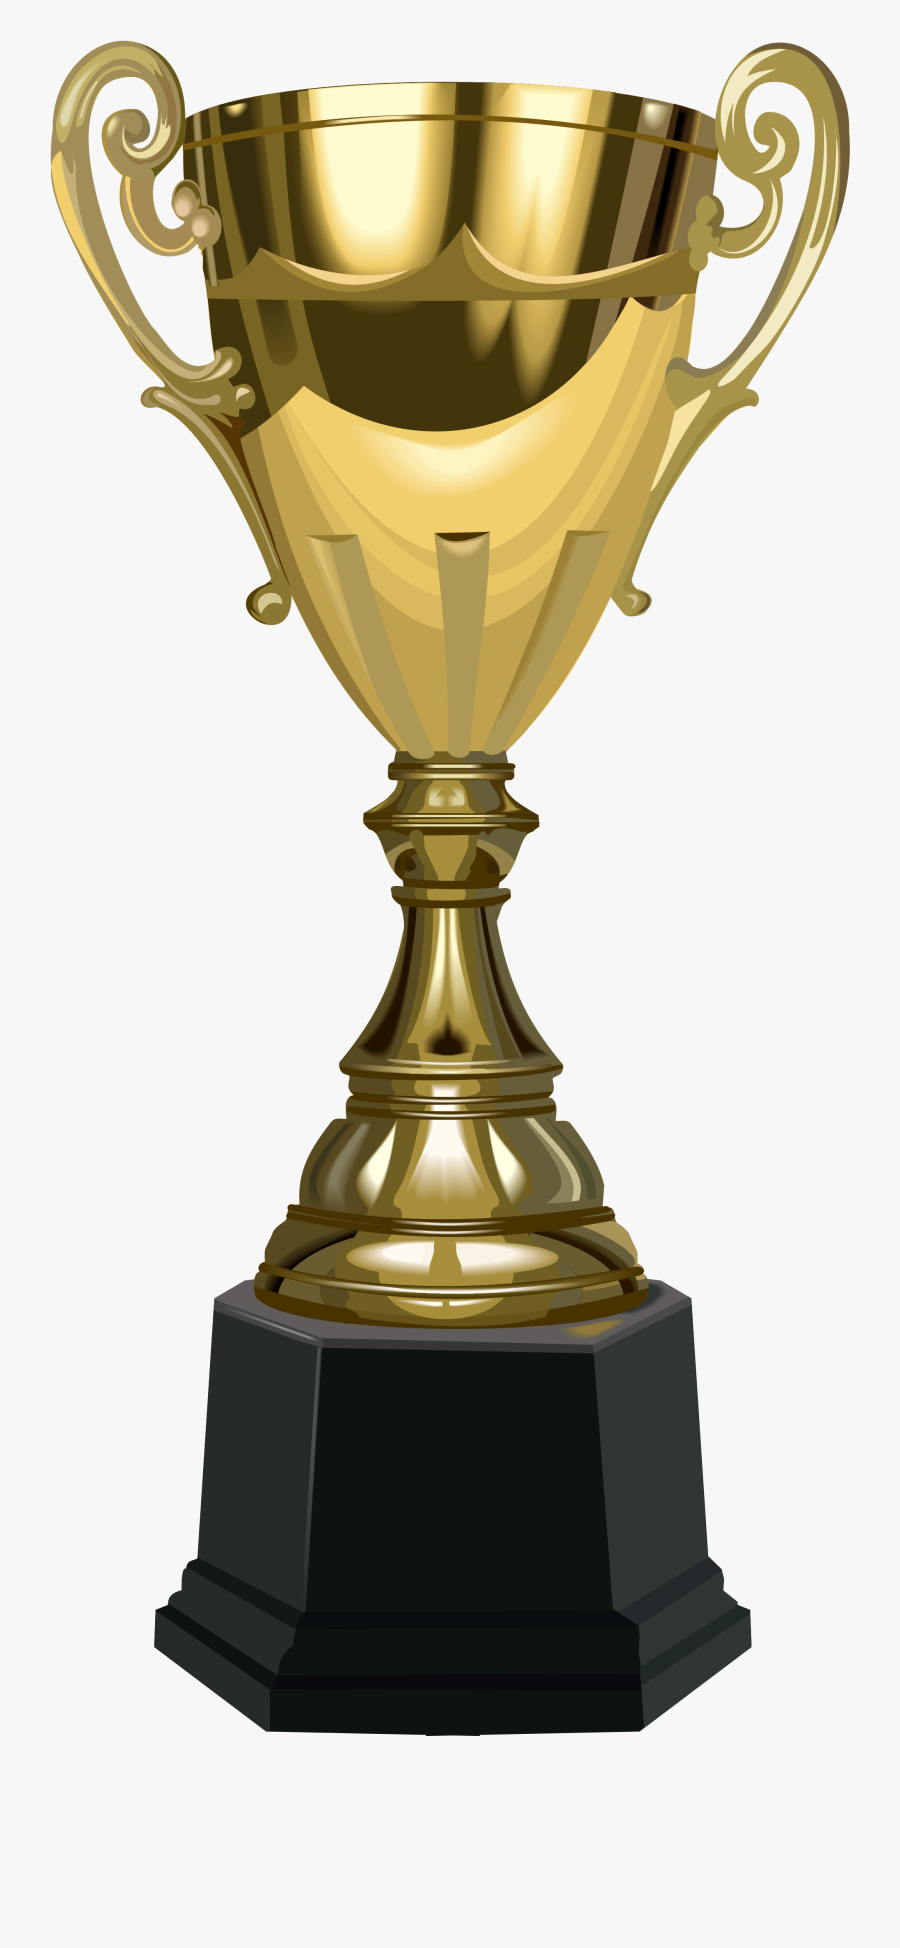 Cup Trophy Clipart Graphic Design Inspiration - Trophy Png, Transparent Clipart